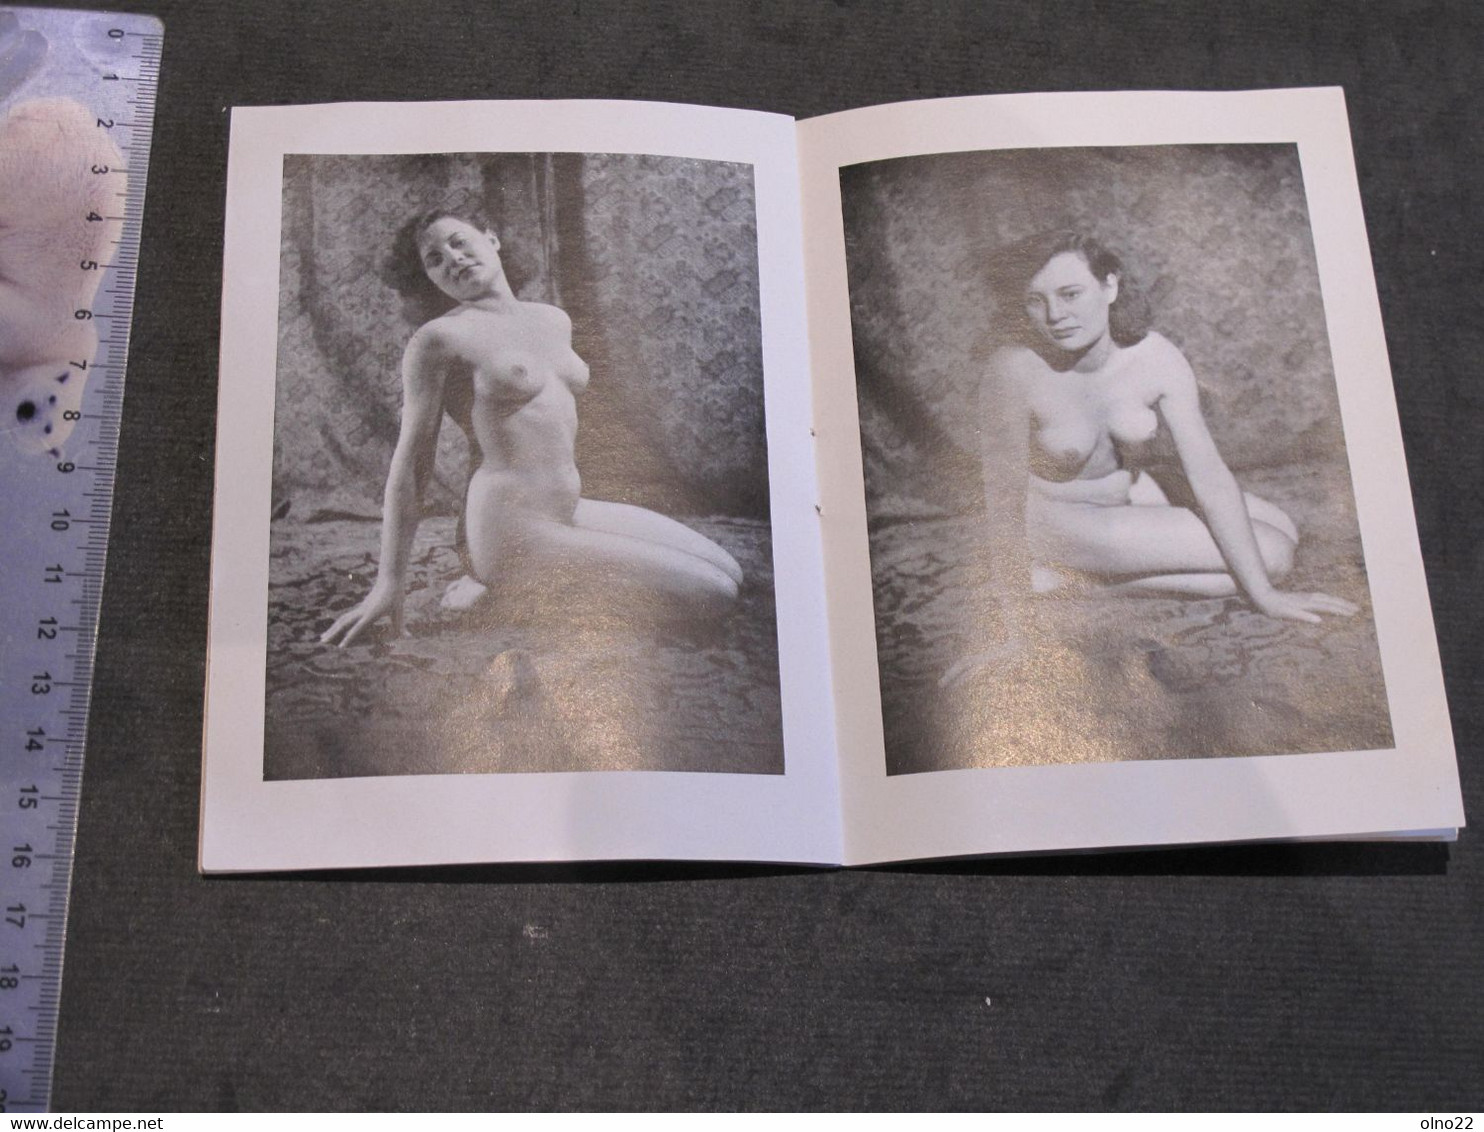 HARMONIE - CAMERA BIELD KIEL - PETIT RECUEIL DE 15 PHOTOS N/B DE NUS FEMININS EDITION ALLEMANDE - CIRCA ANNEES 50 - Fotografia